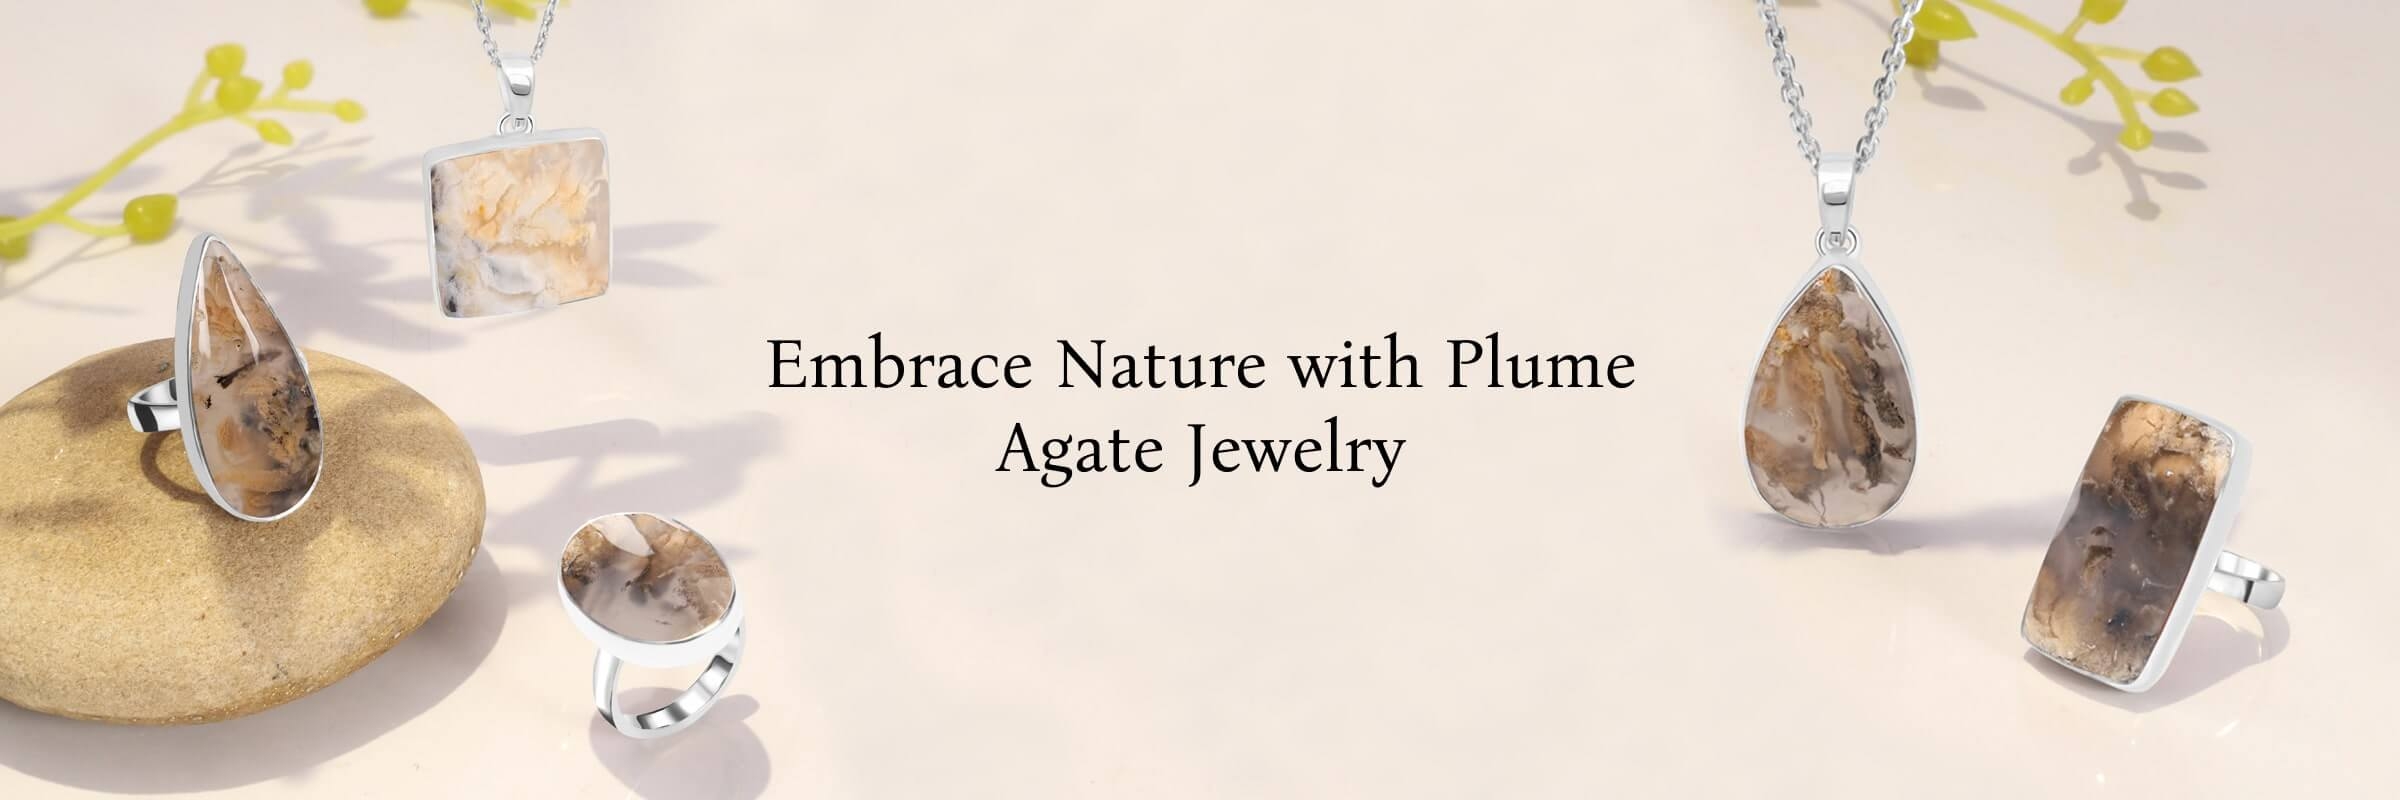 Plume Agate Jewelry